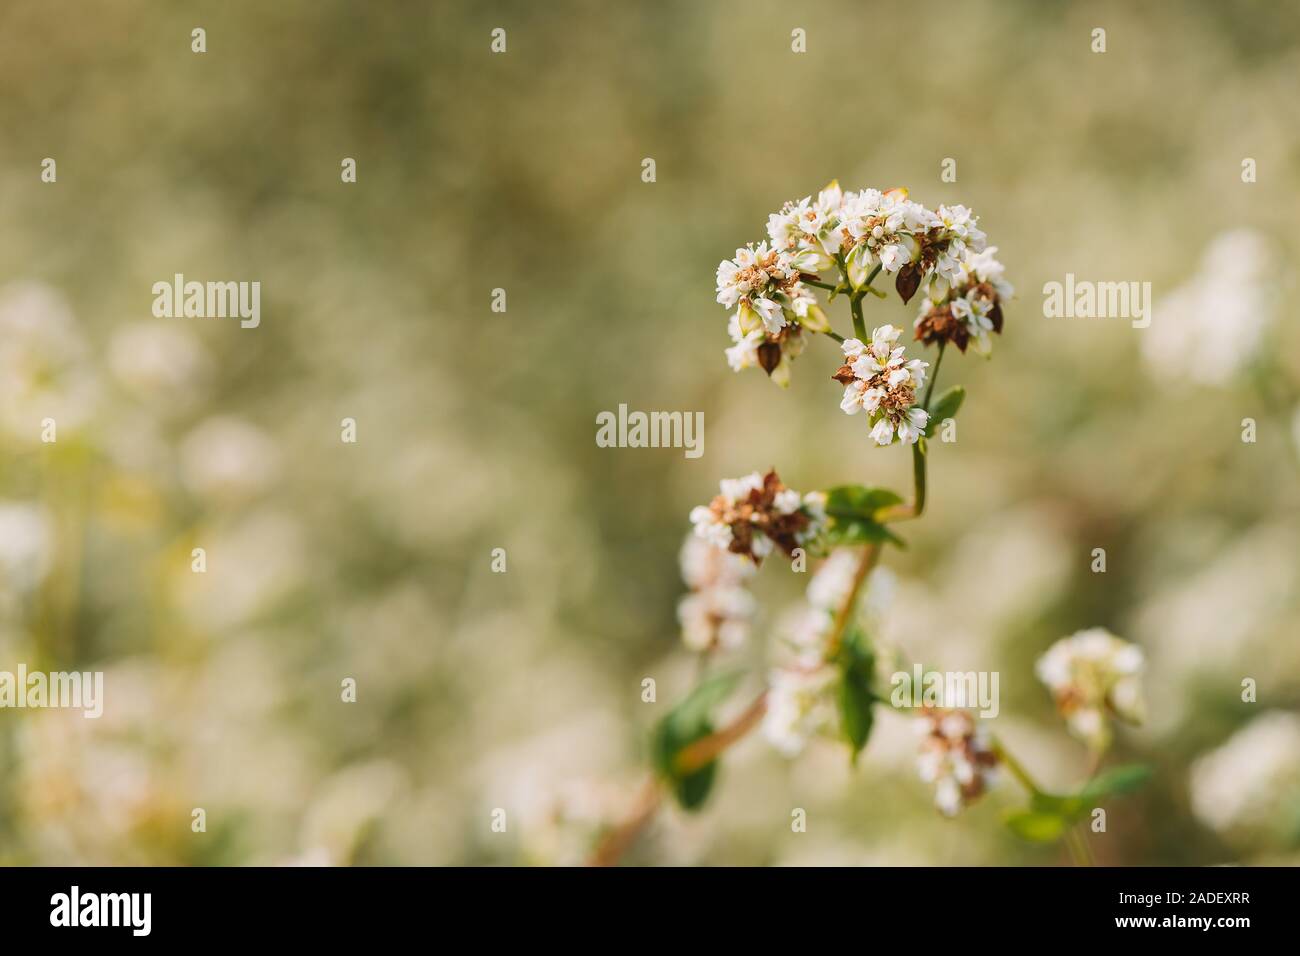 Buckwheat (Fagopyrum esculentum) flower in cultivated field, selective focus Stock Photo